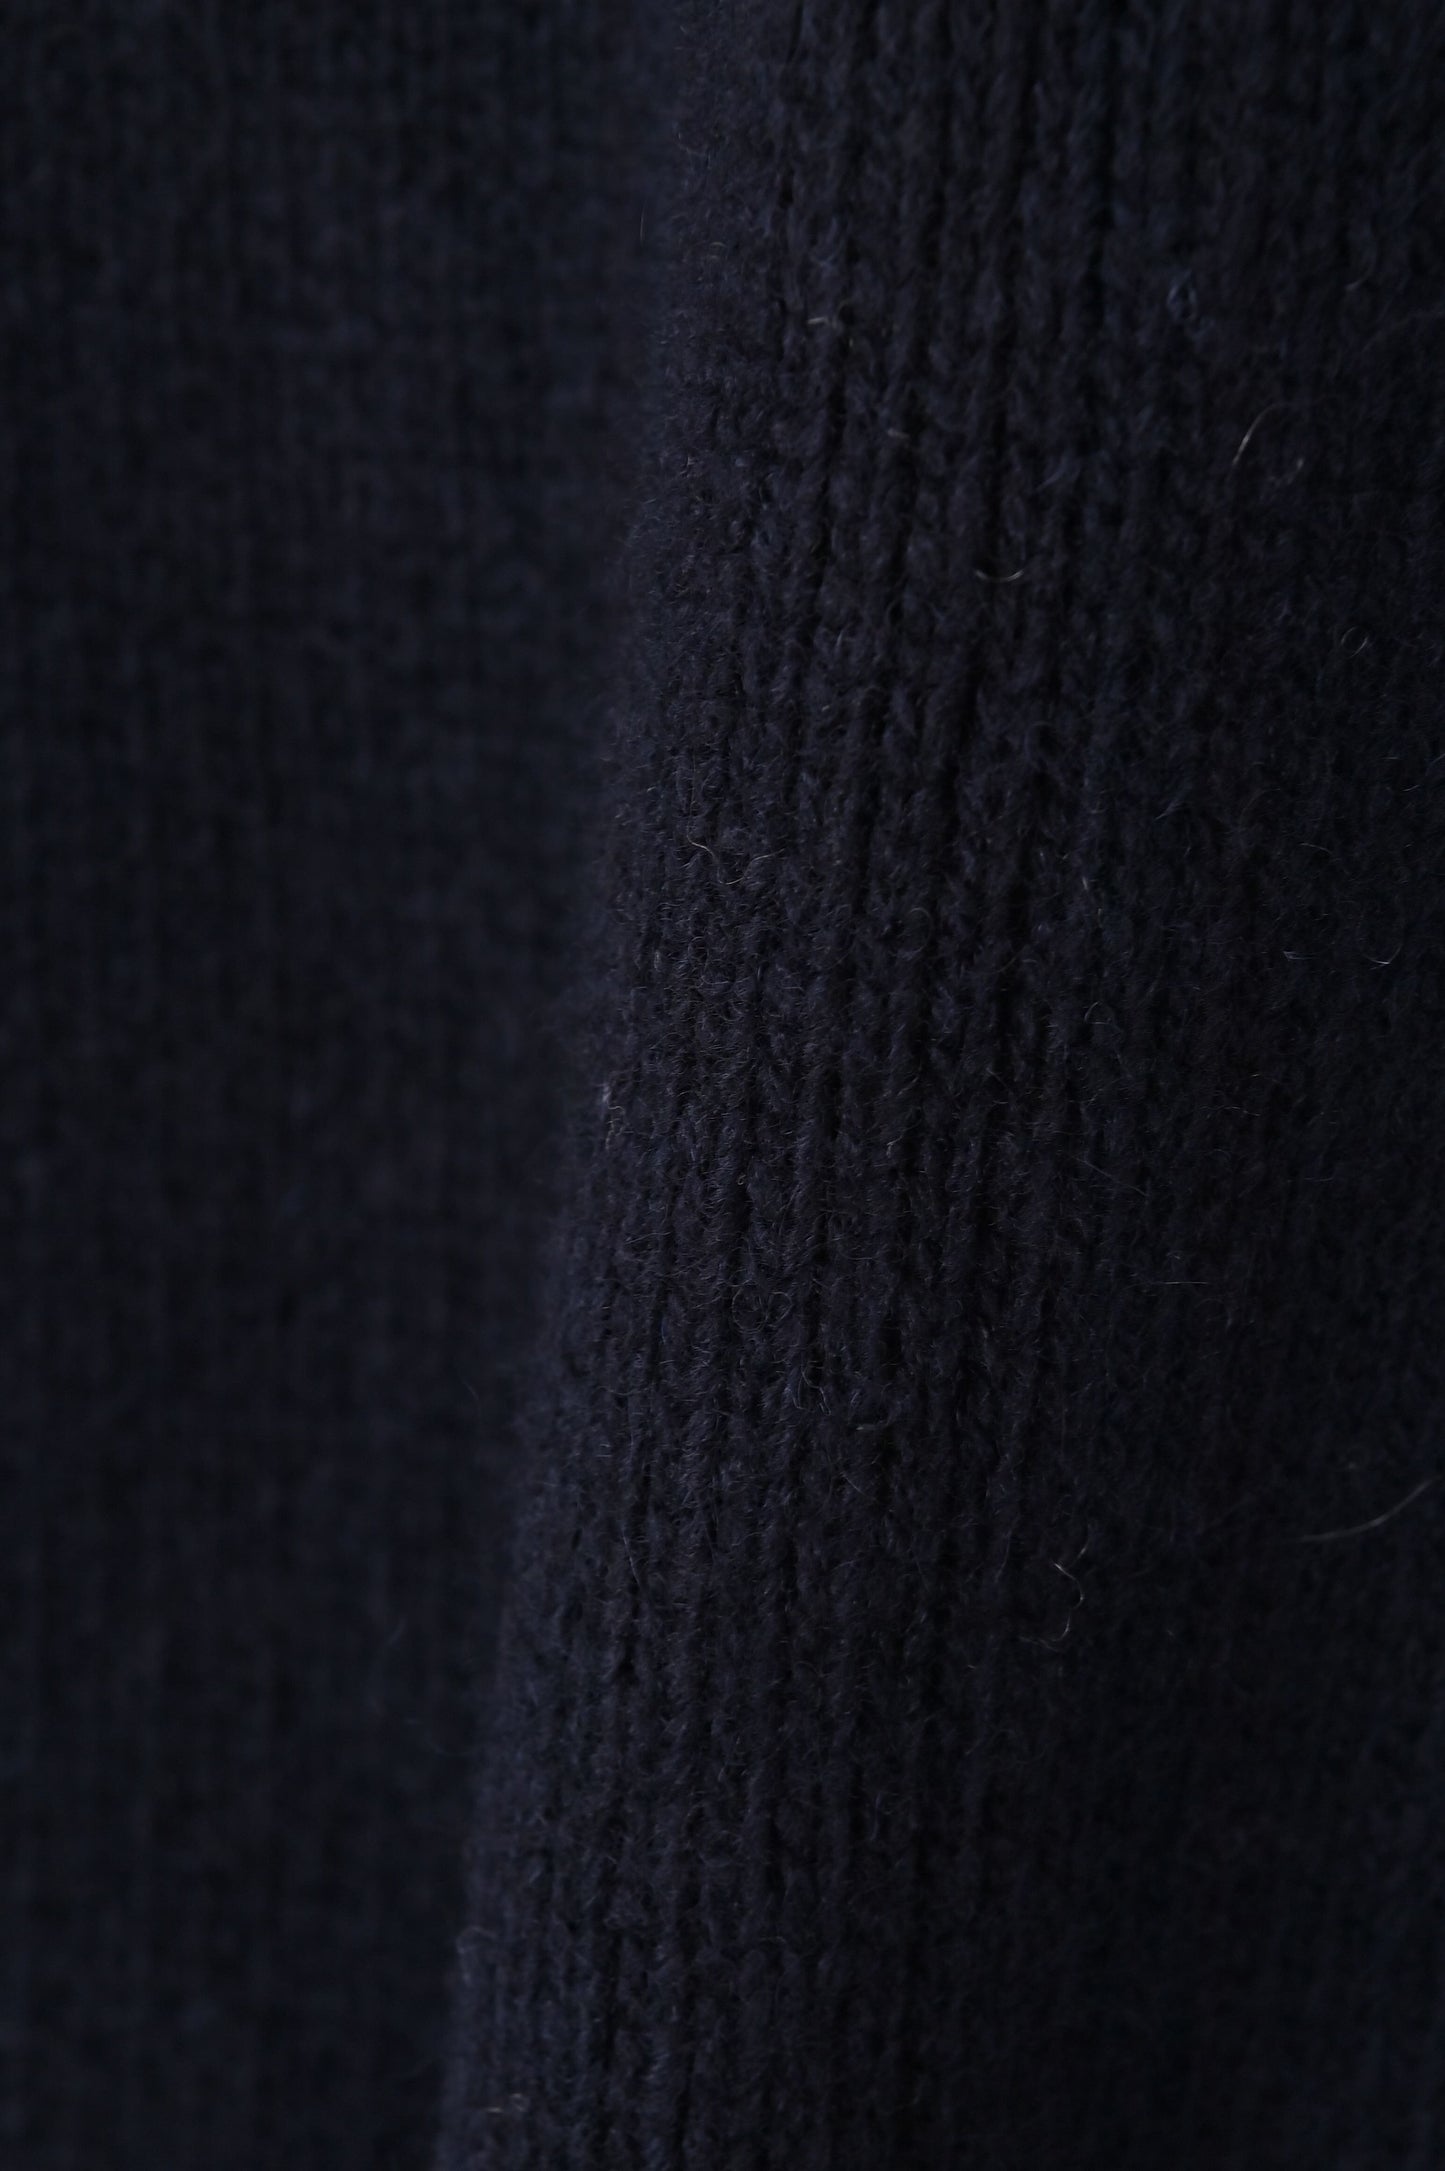 Wool rib neck knit cardigan